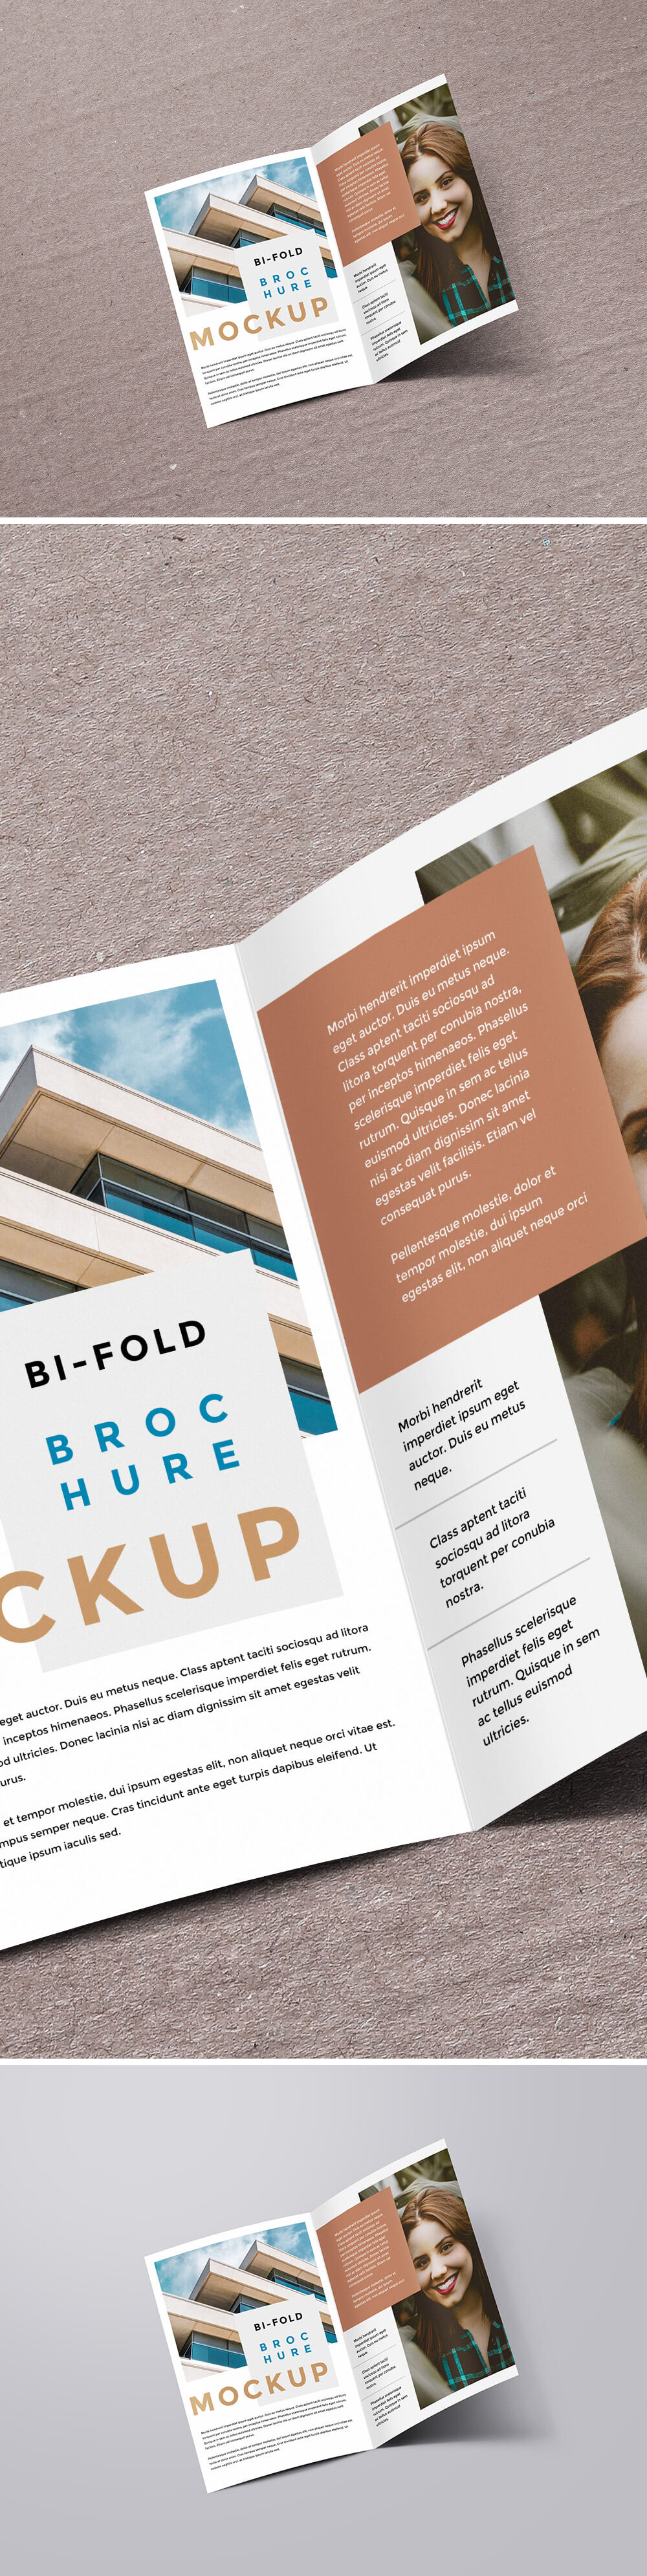 Bifold Brochure Mockup PSD